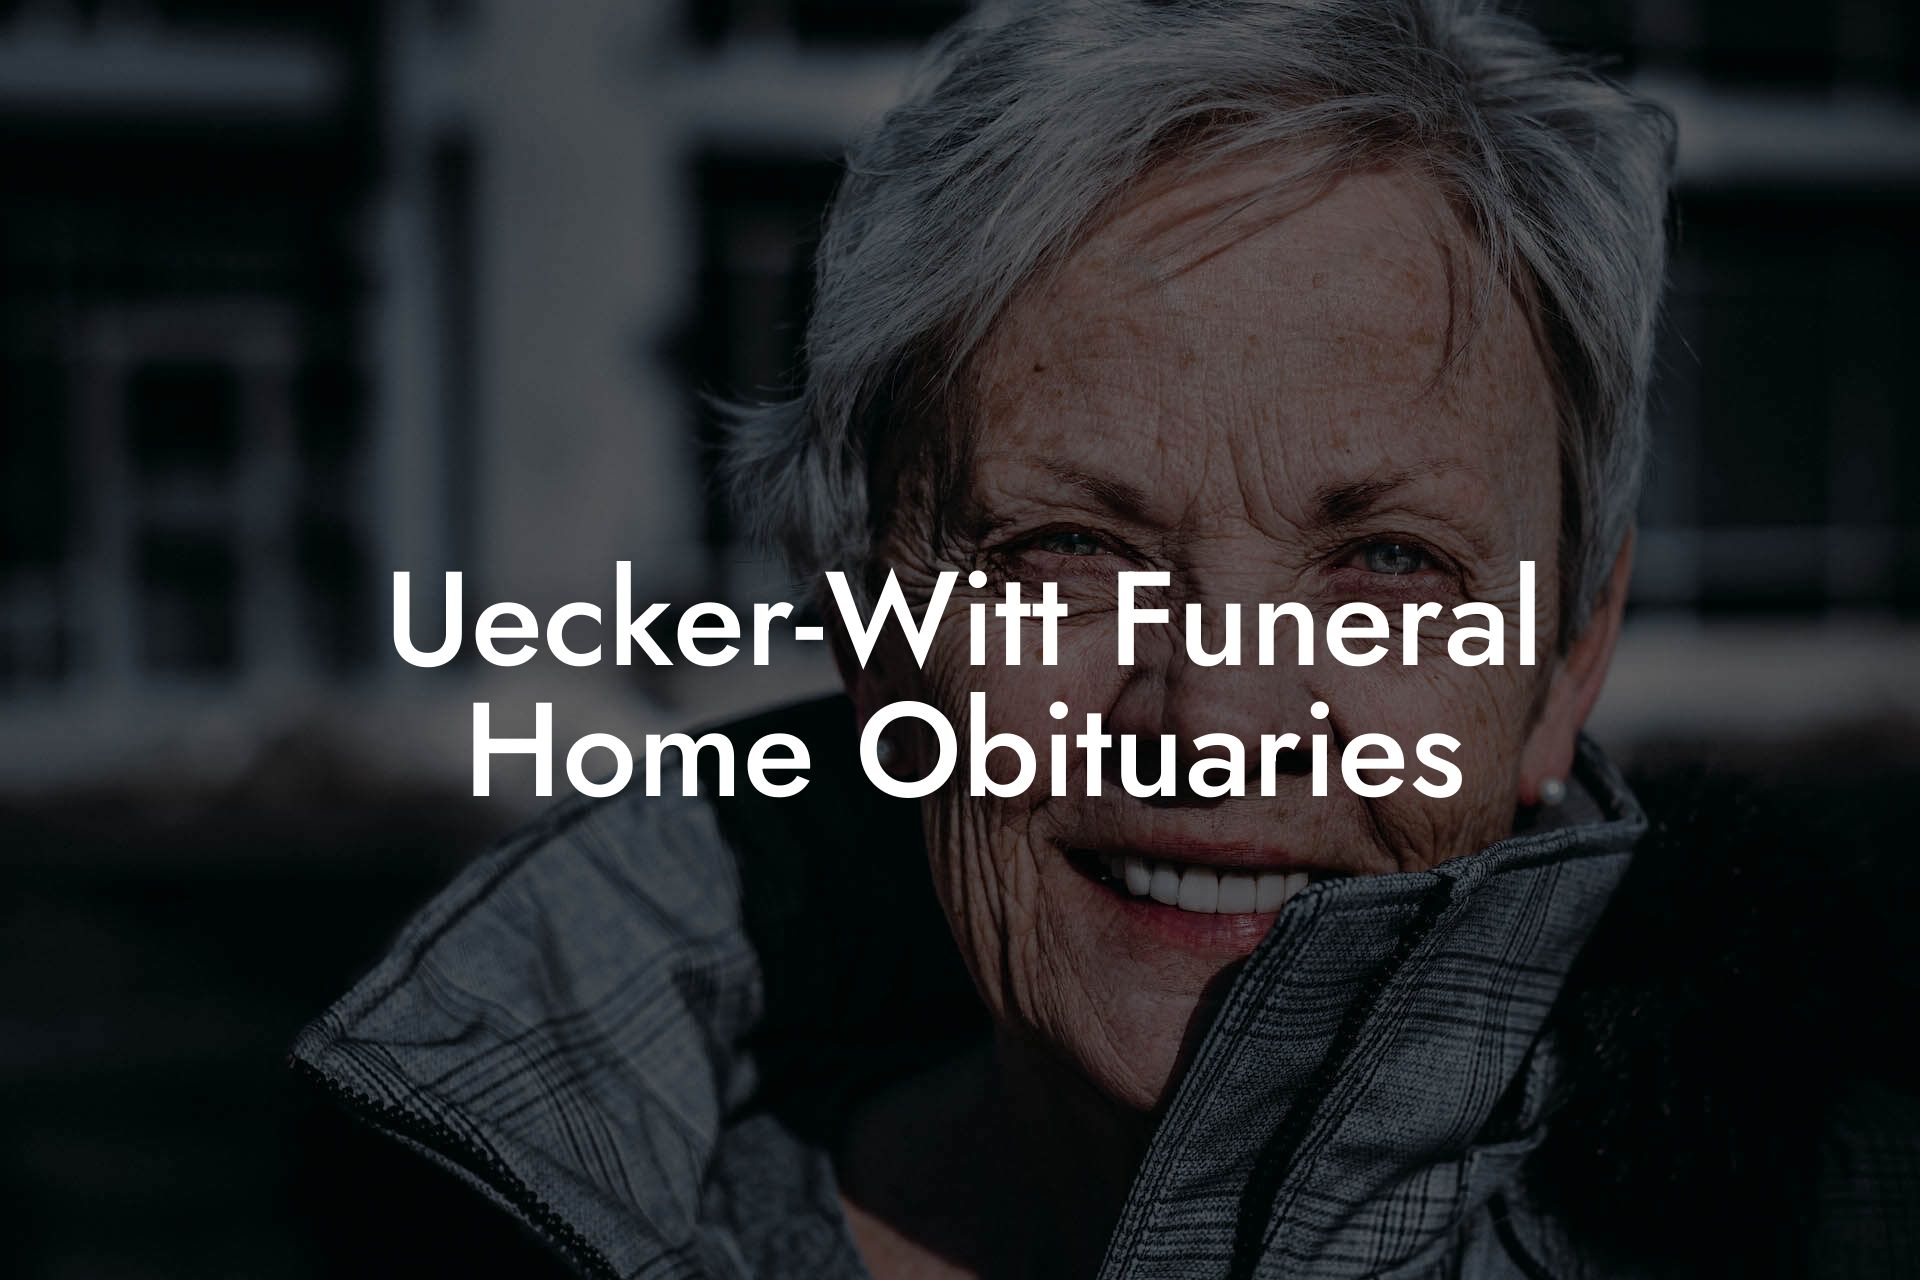 Uecker-Witt Funeral Home Obituaries